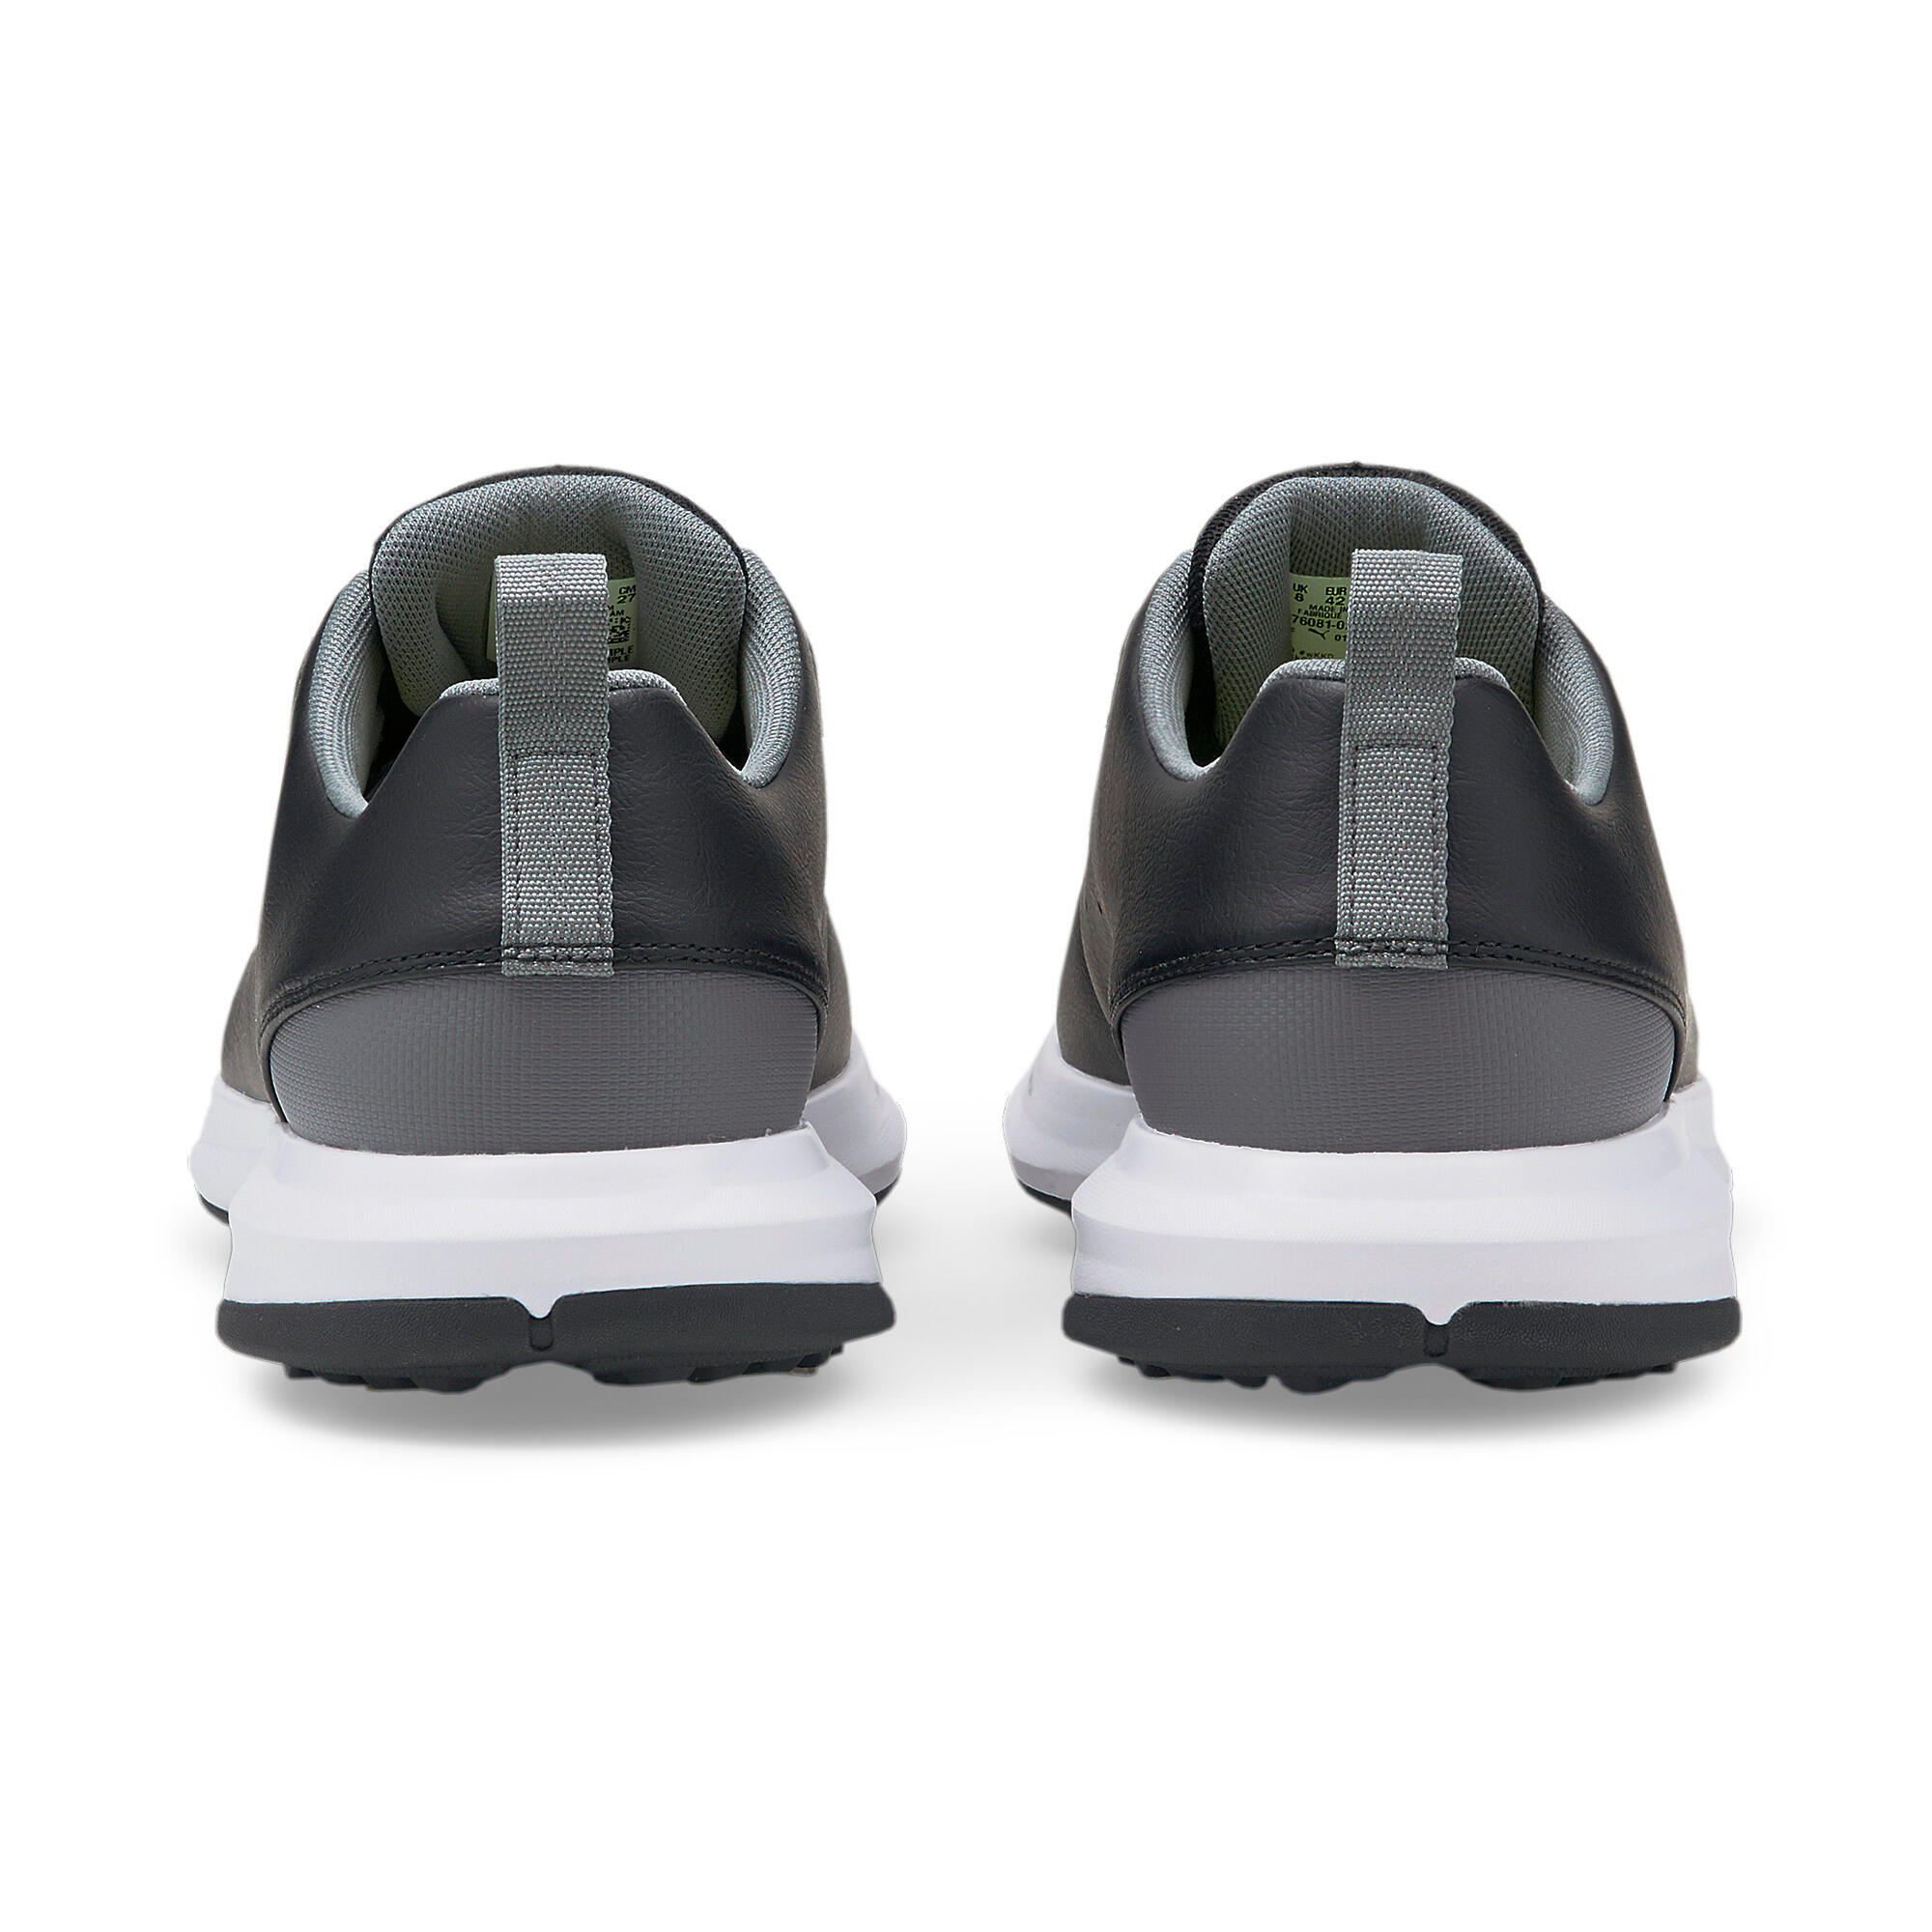 PUMA Mens FUSION FX Tech Golf Shoes - Black-Silver-Quiet Shade 5/7